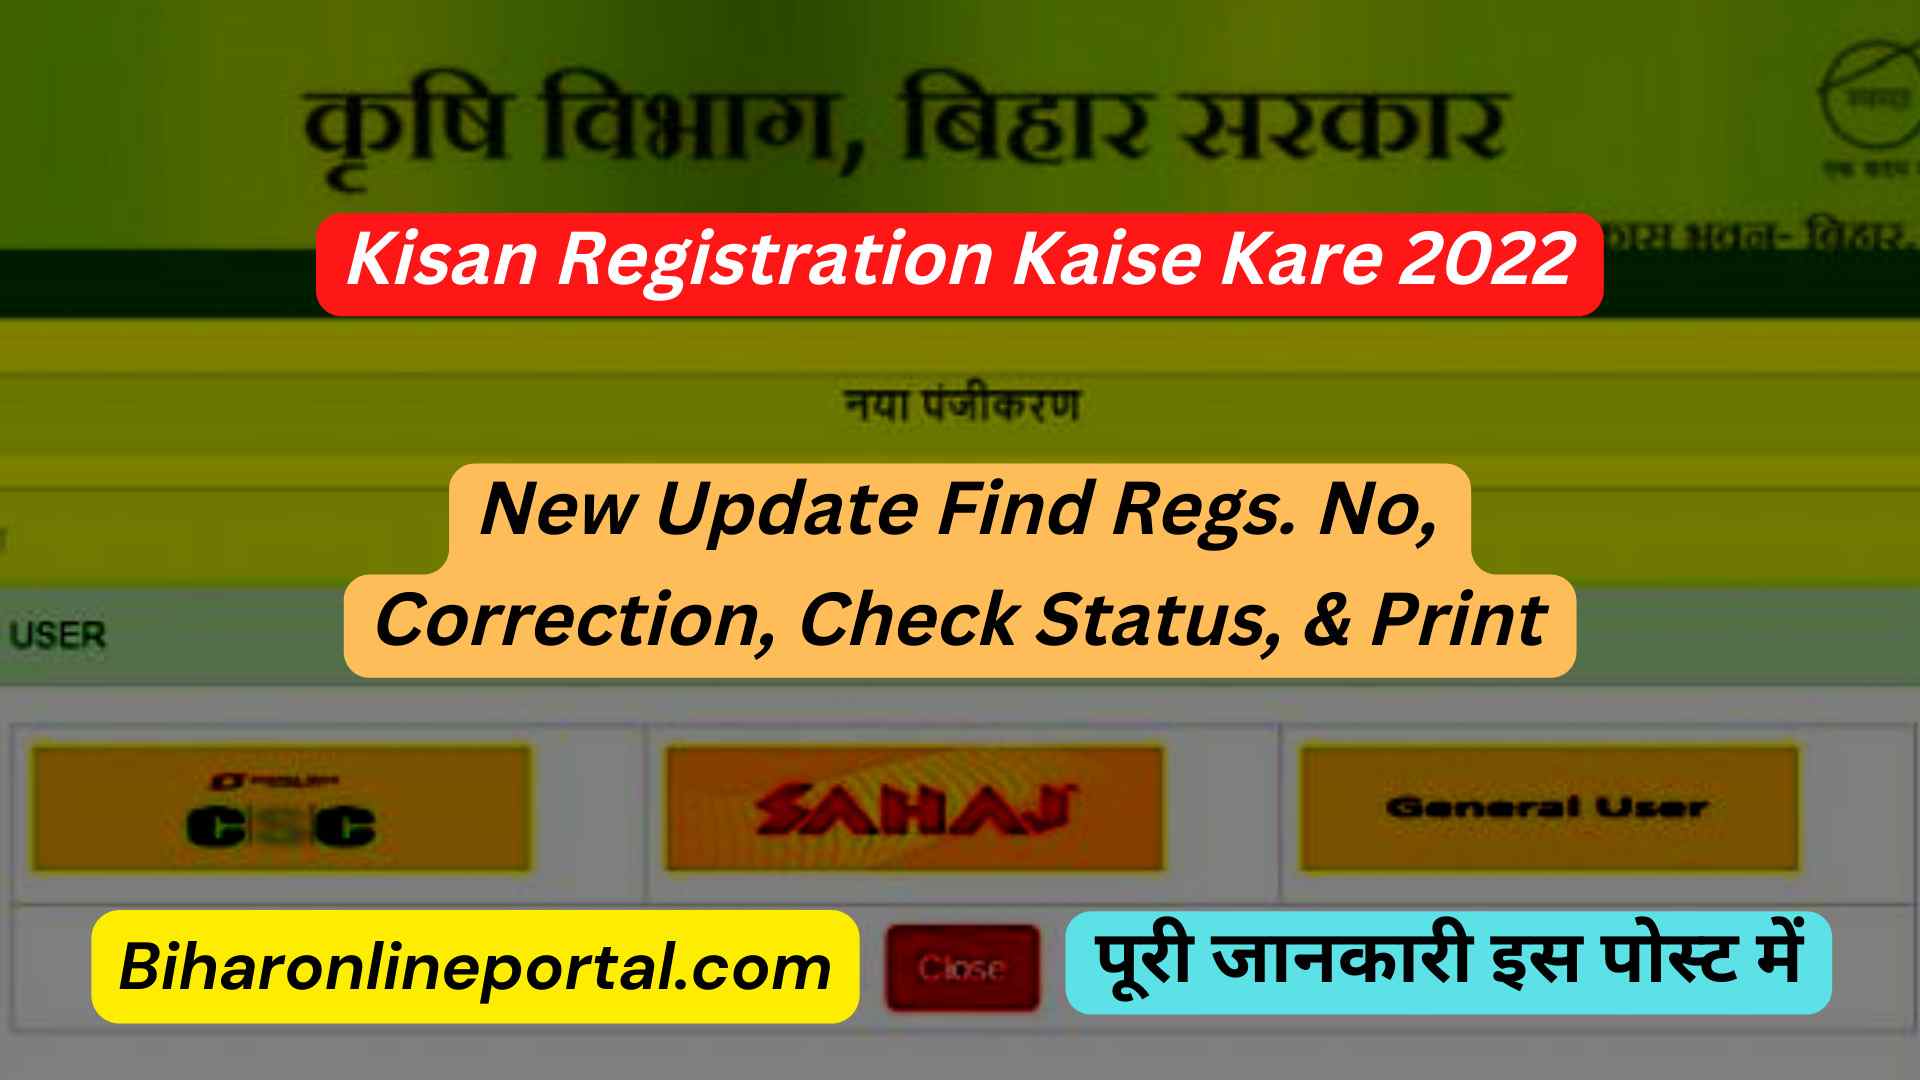 Kisan Registration Kaise Kare 2022